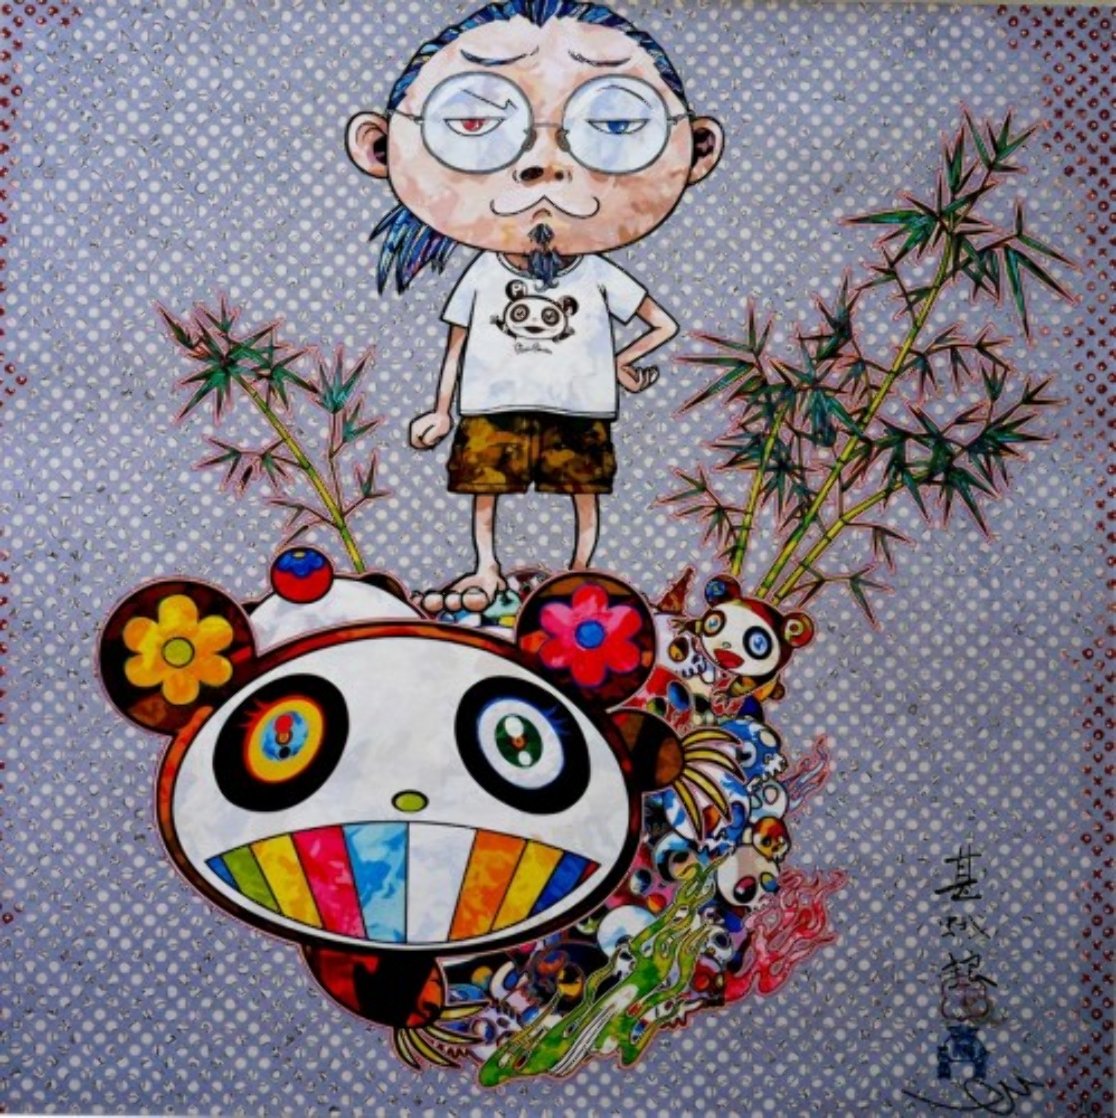 I Met a Panda Family  2013 Limited Edition Print by Takashi Murakami